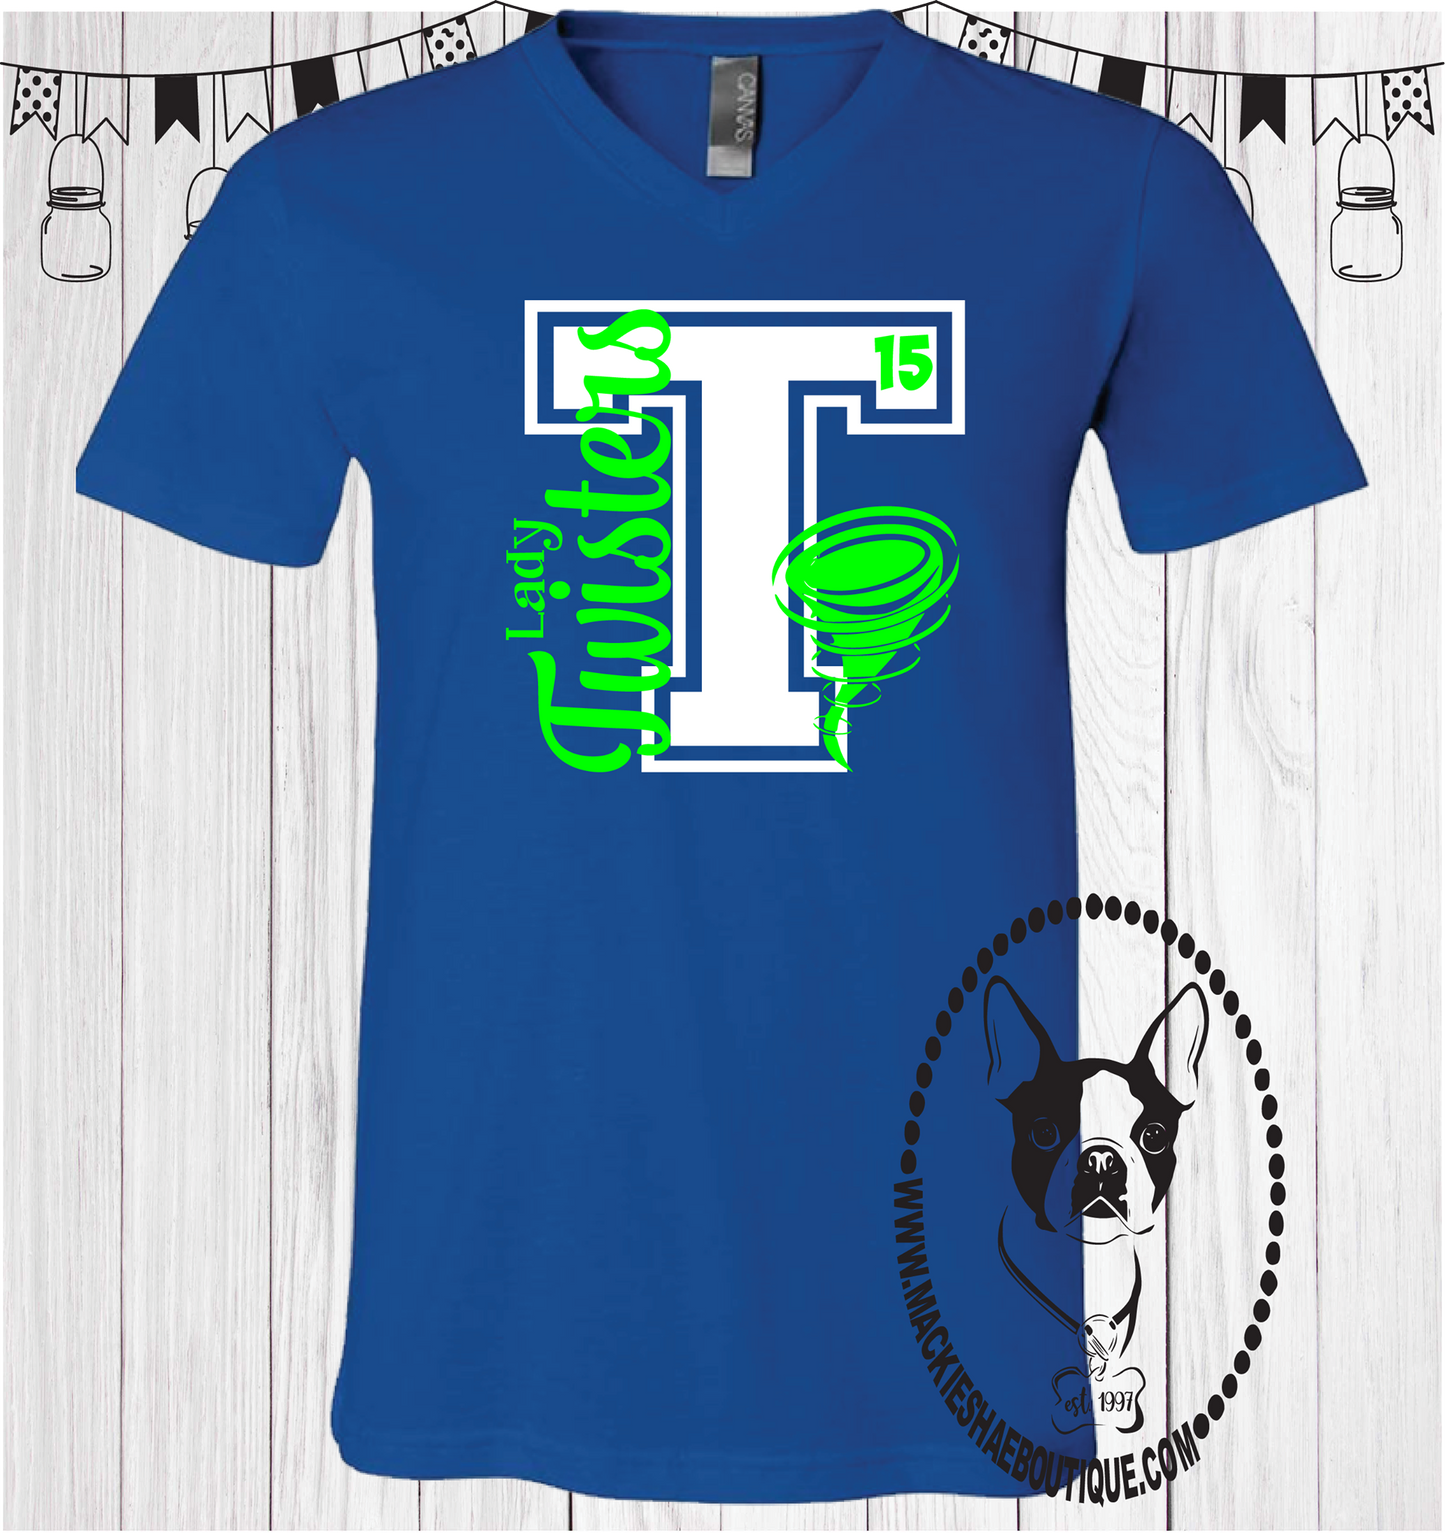 Lady Twisters Basketball Custom Shirt, Short Sleeve (3 Design Options)